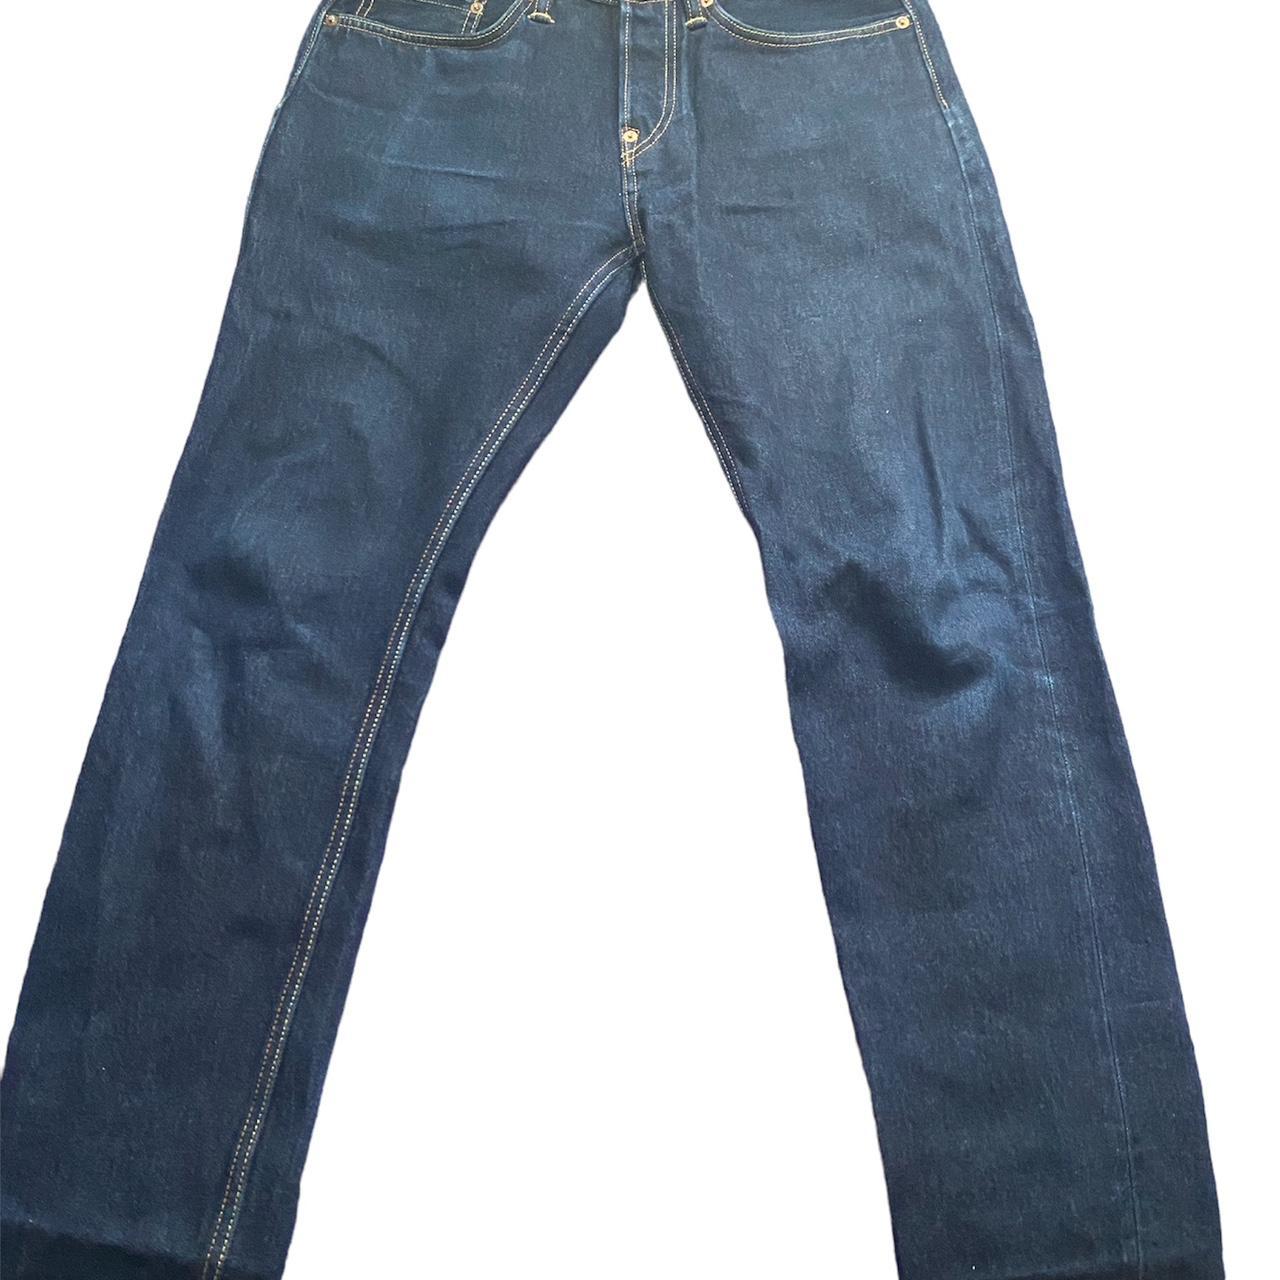 30x34 Evisu denim jeans Worn a few times Good... - Depop